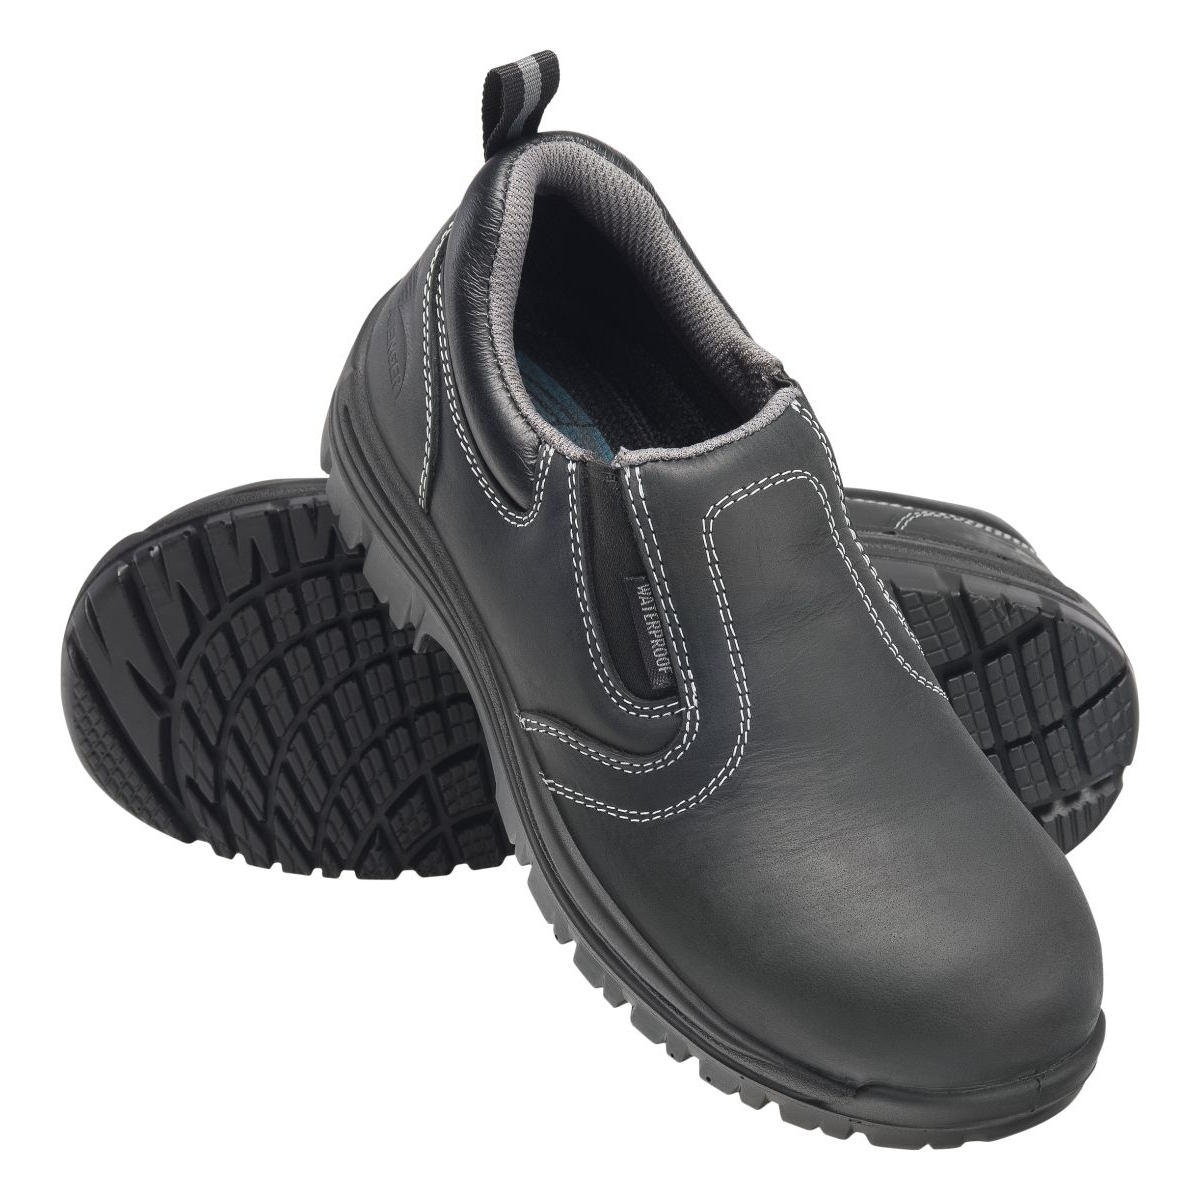 FSI FOOTWEAR SPECIALTIES INTERNATIONAL NAUTILUS Avenger Women's Foreman Slip-On Composite Toe PR Work Shoes Black - A7169 - BLACK, 9.5-W